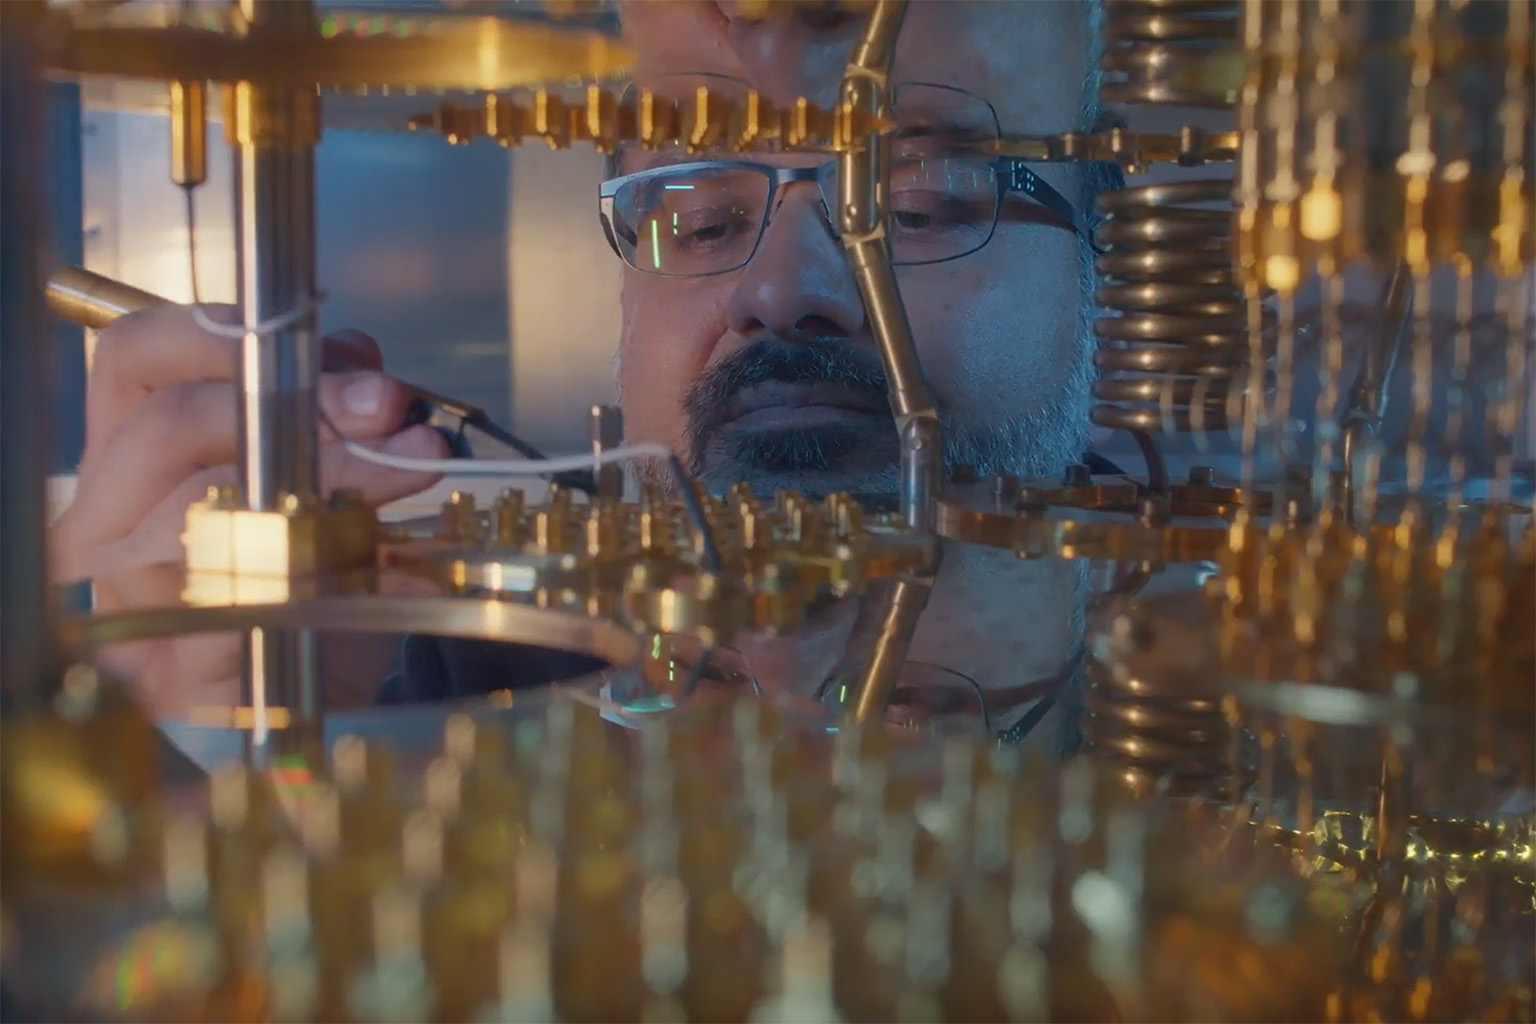 Irfan Siddiqi fine tunes a quantum refrigerator